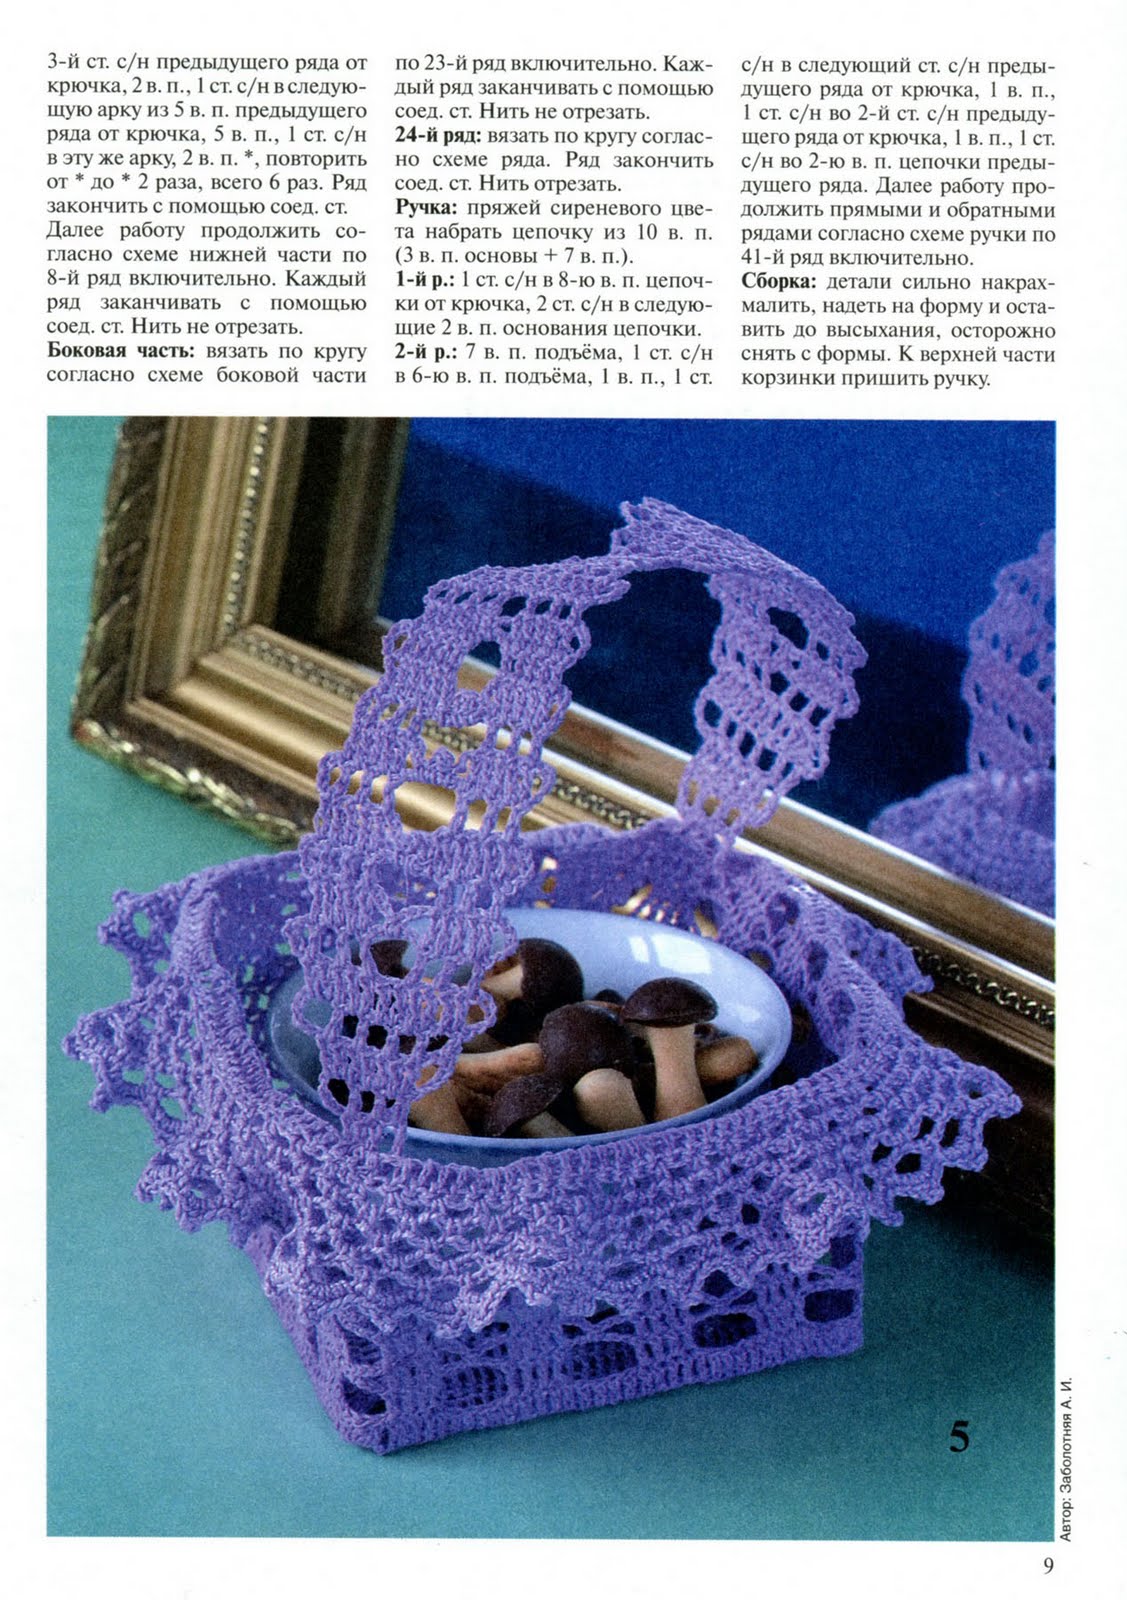 starched crochet square basket (1)